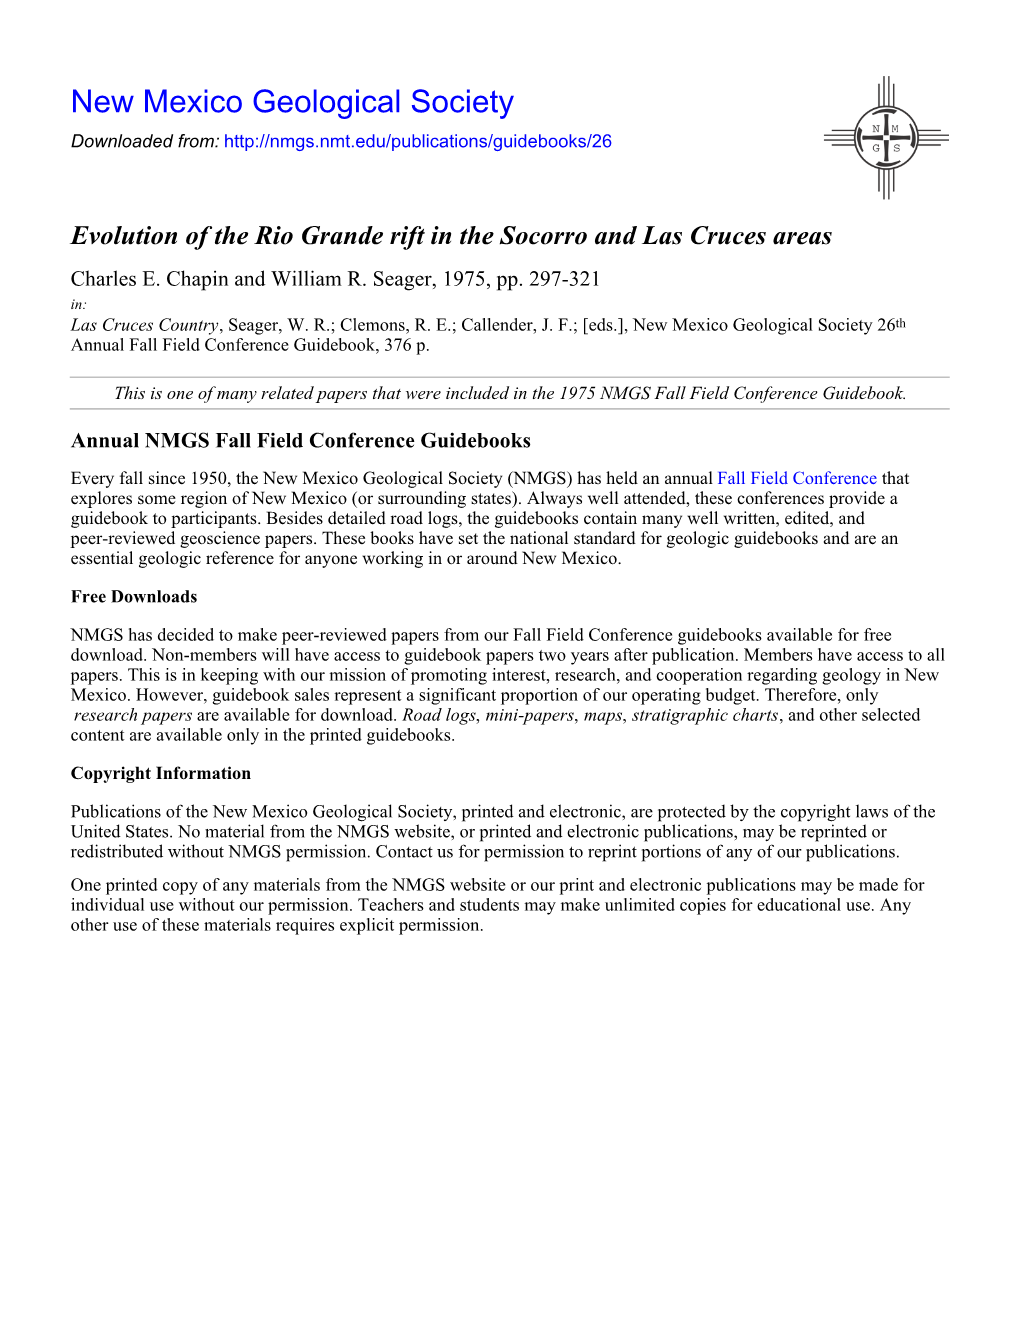 Evolution of the Rio Grande Rift in the Socorro and Las Cruces Areas Charles E